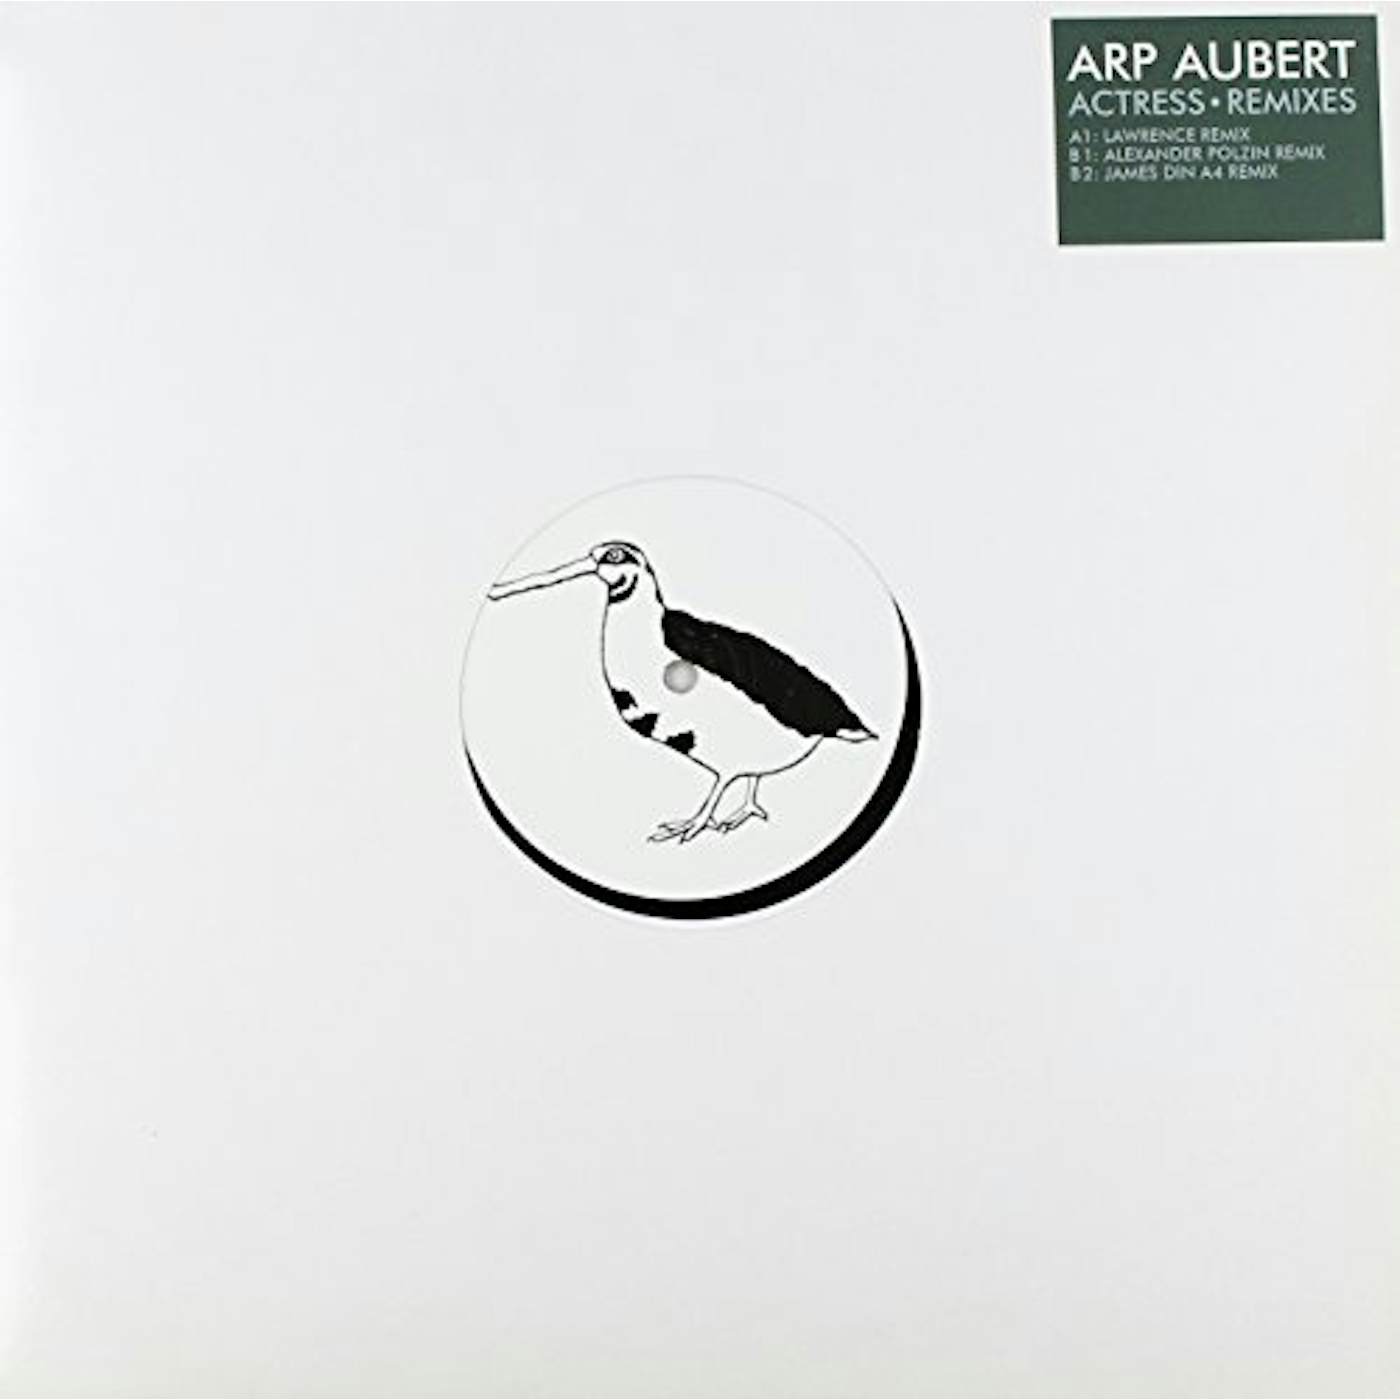 Arp Aubert ACTRESS REMIXES Vinyl Record